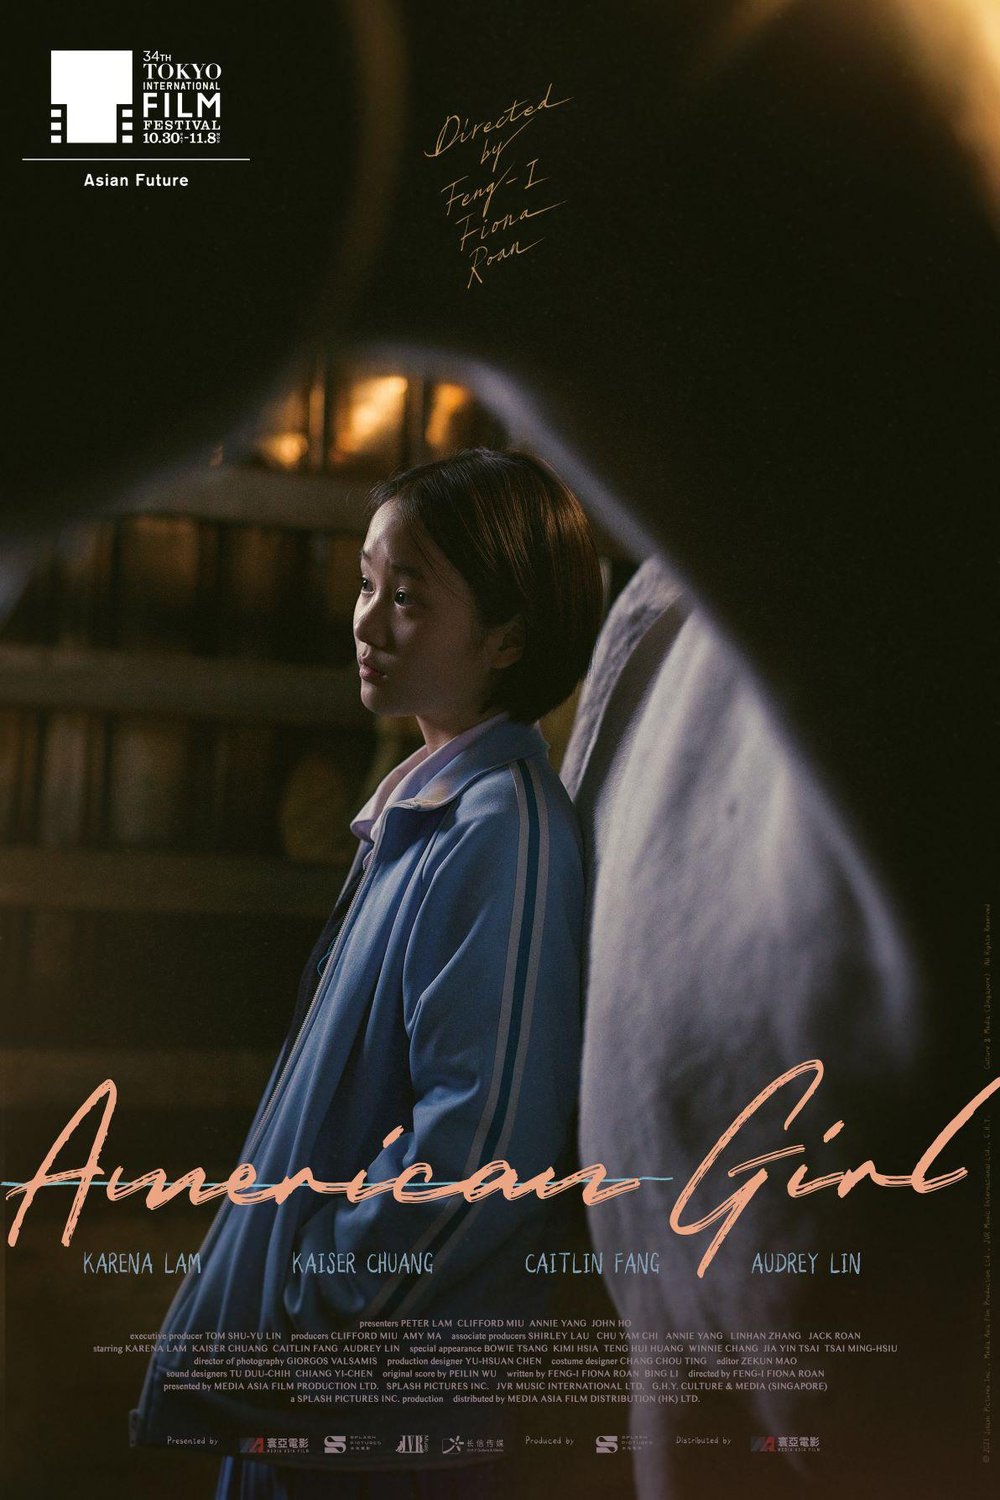 Mandarin poster of the movie American Girl